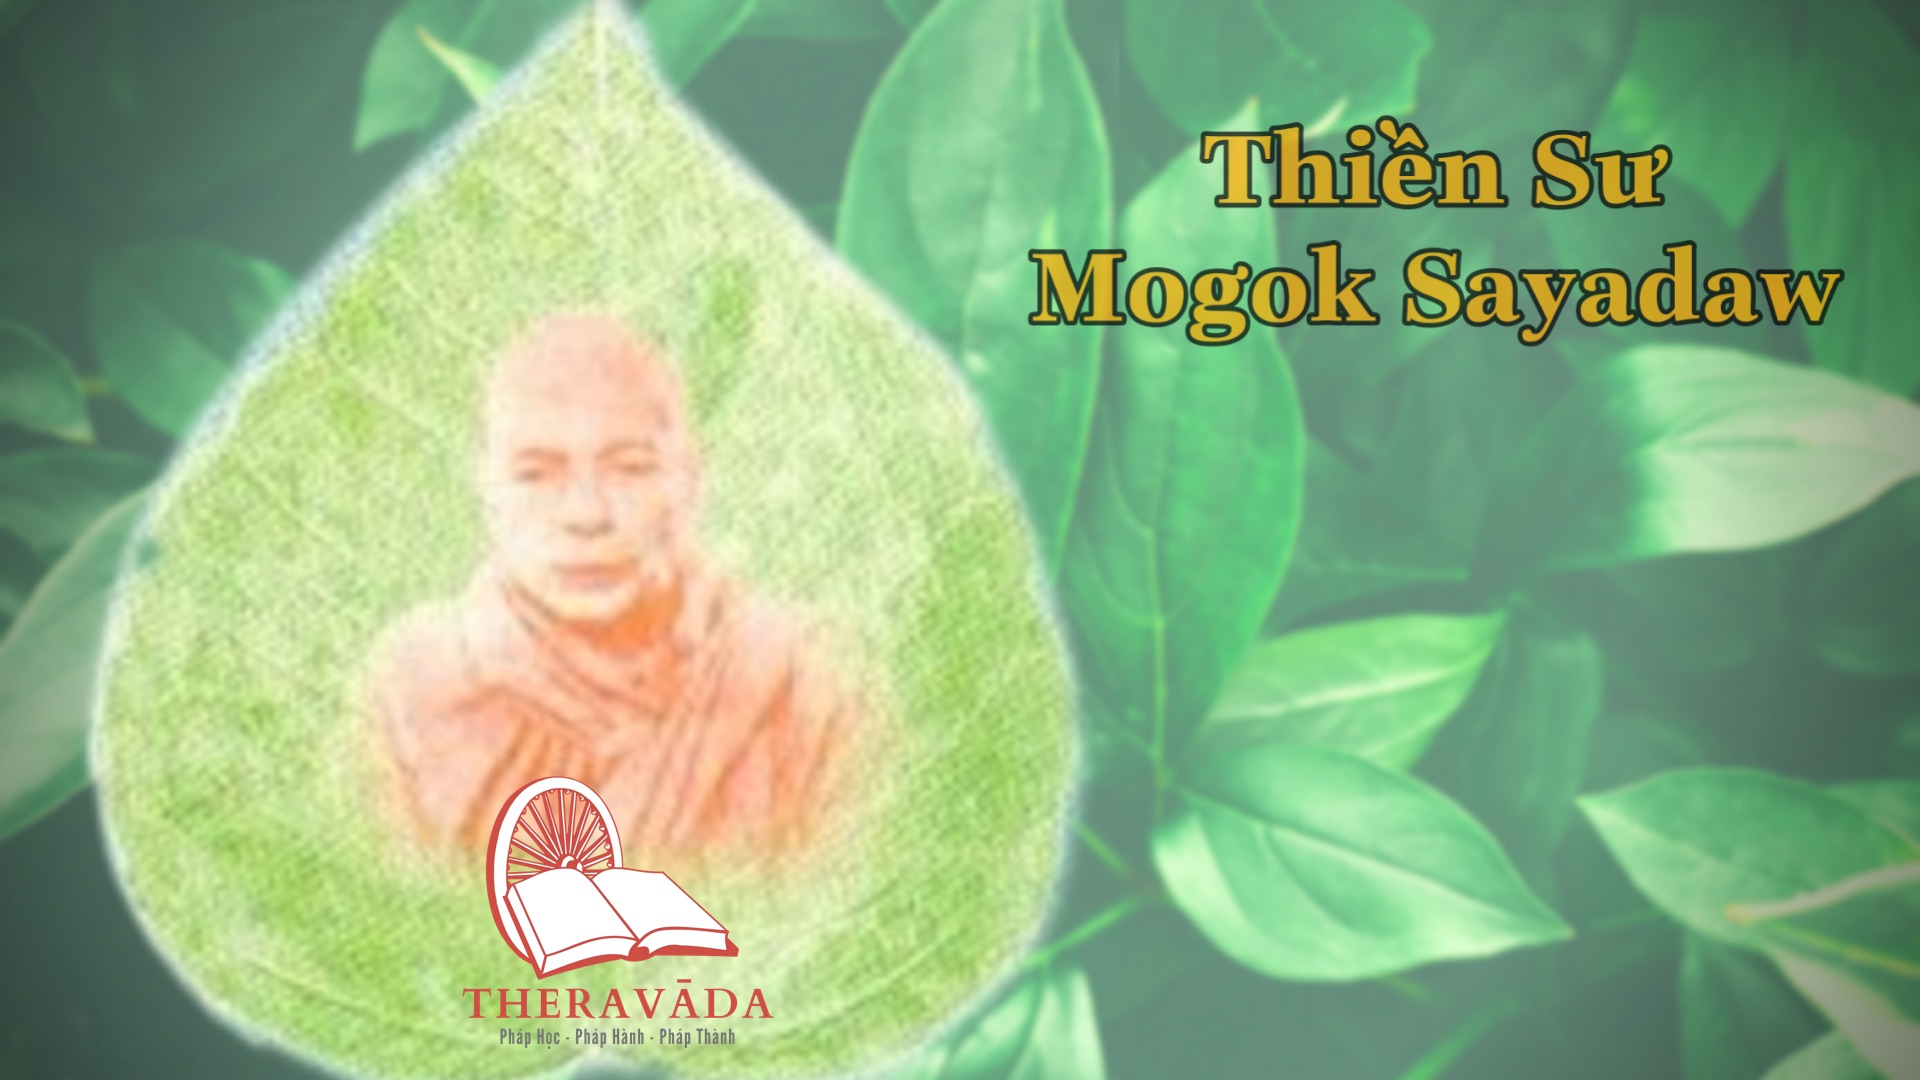 Thiền sư Mogok Sayadaw 2